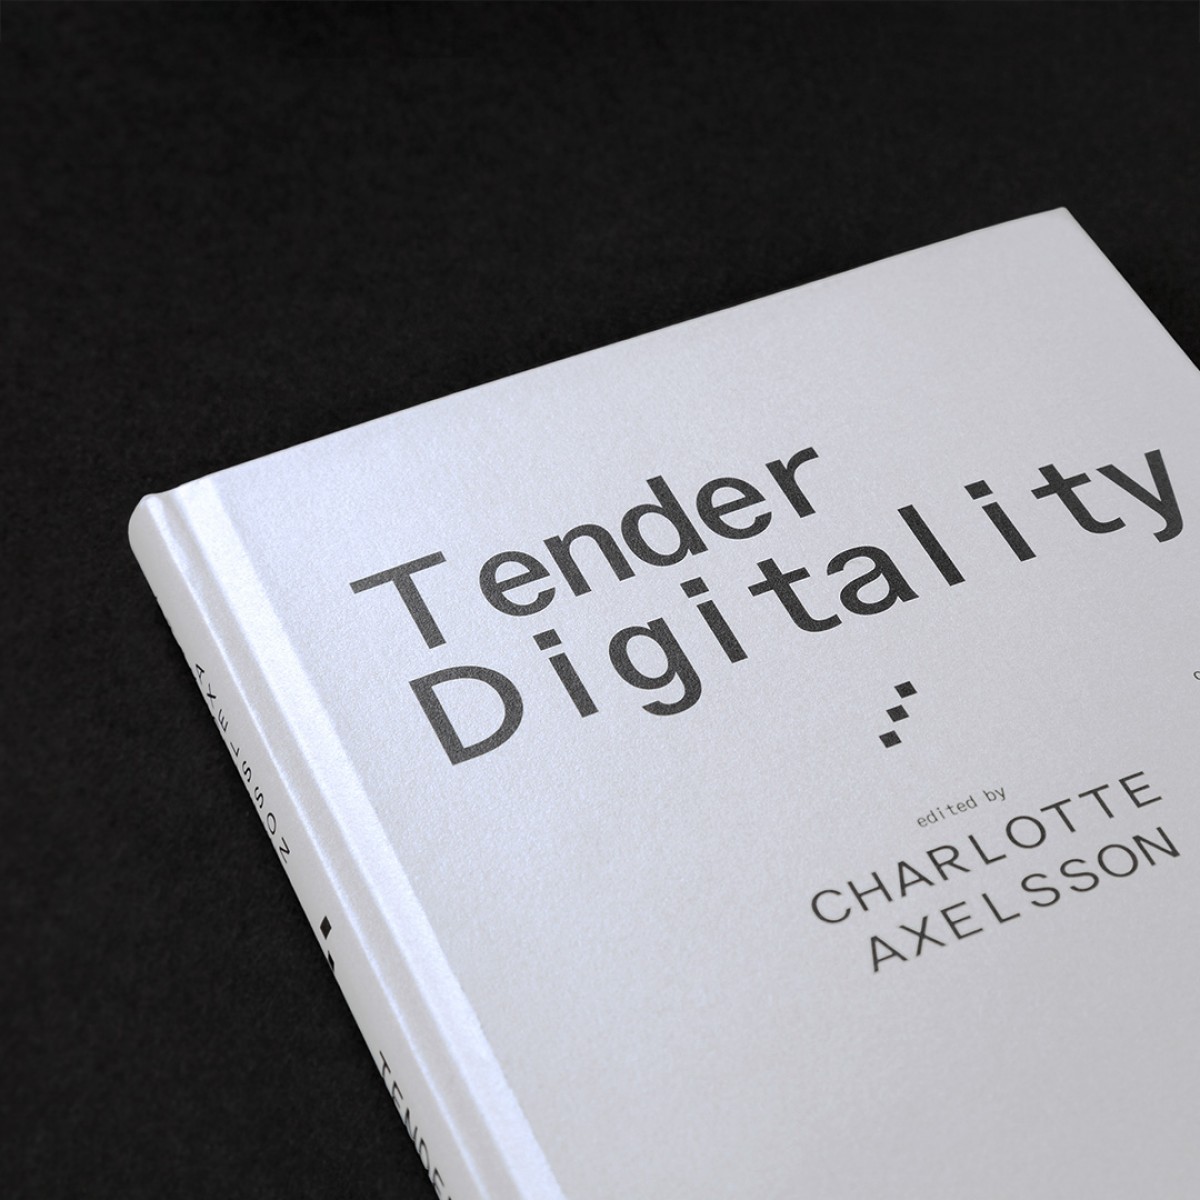 Tender Digitality